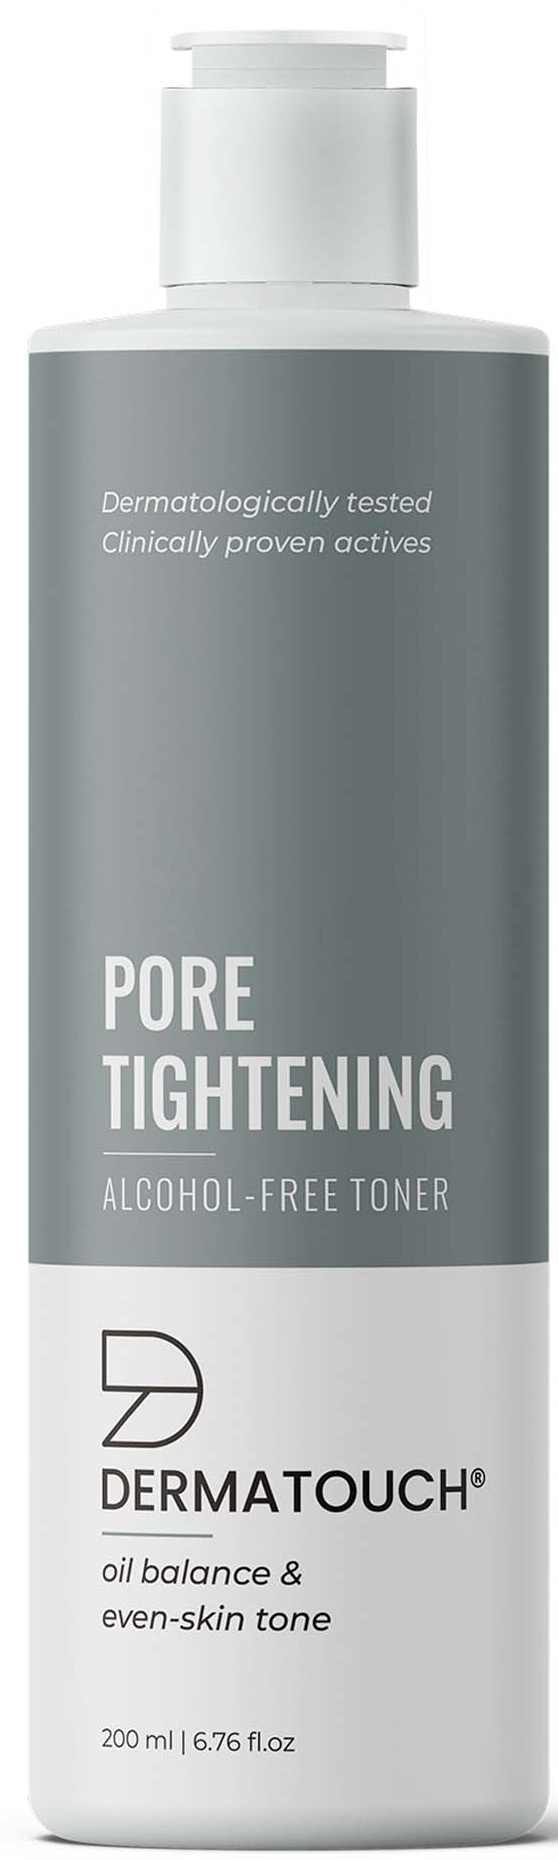 Dermatouch Pore Tightening Alcohol-free Toner